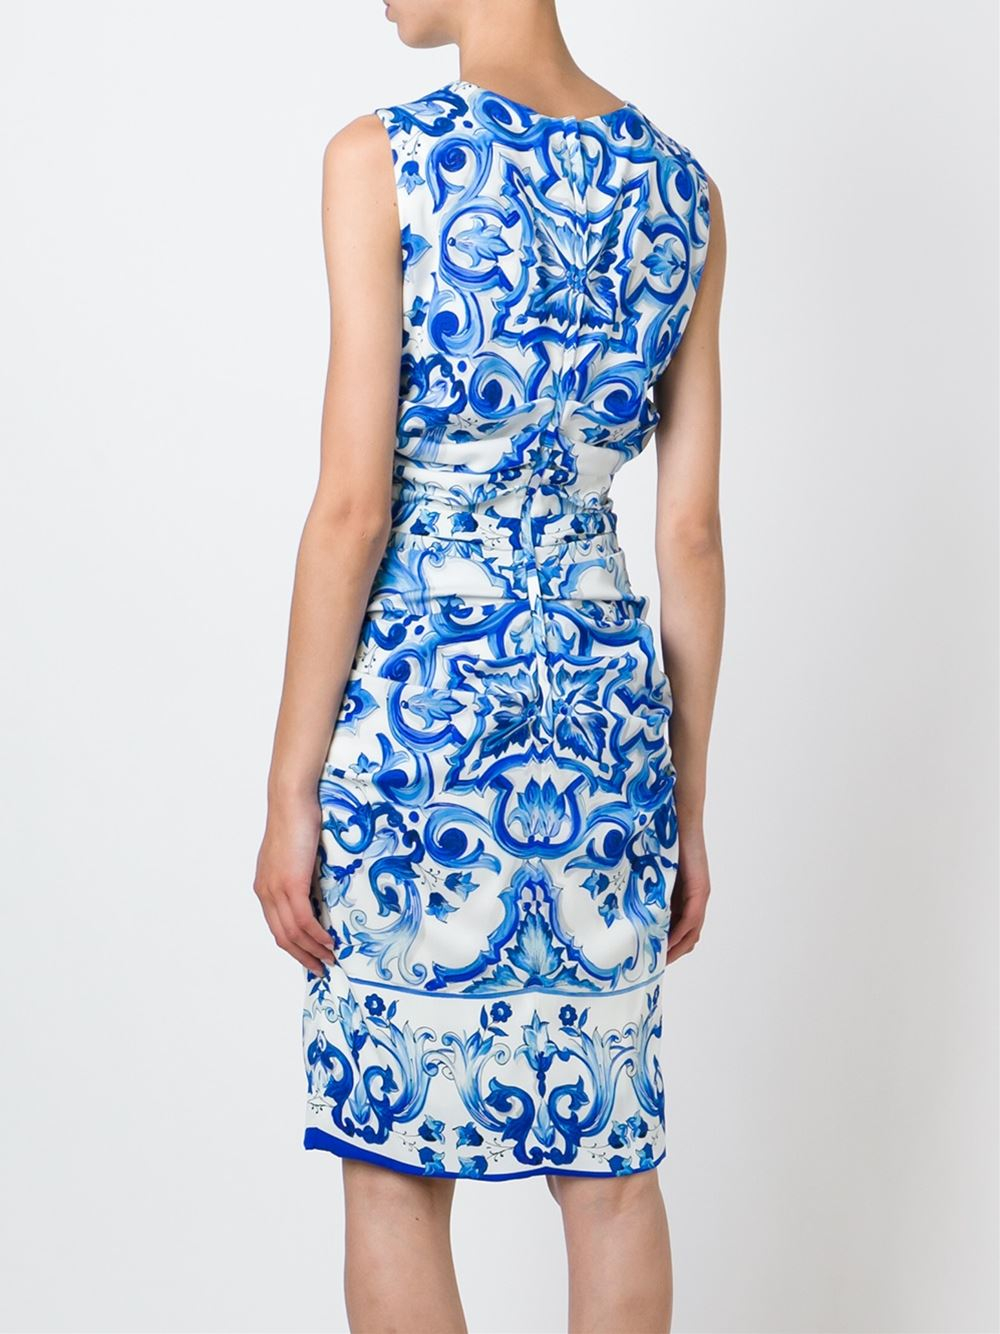 Dolce & gabbana 'majolica' Print Dress in Blue | Lyst